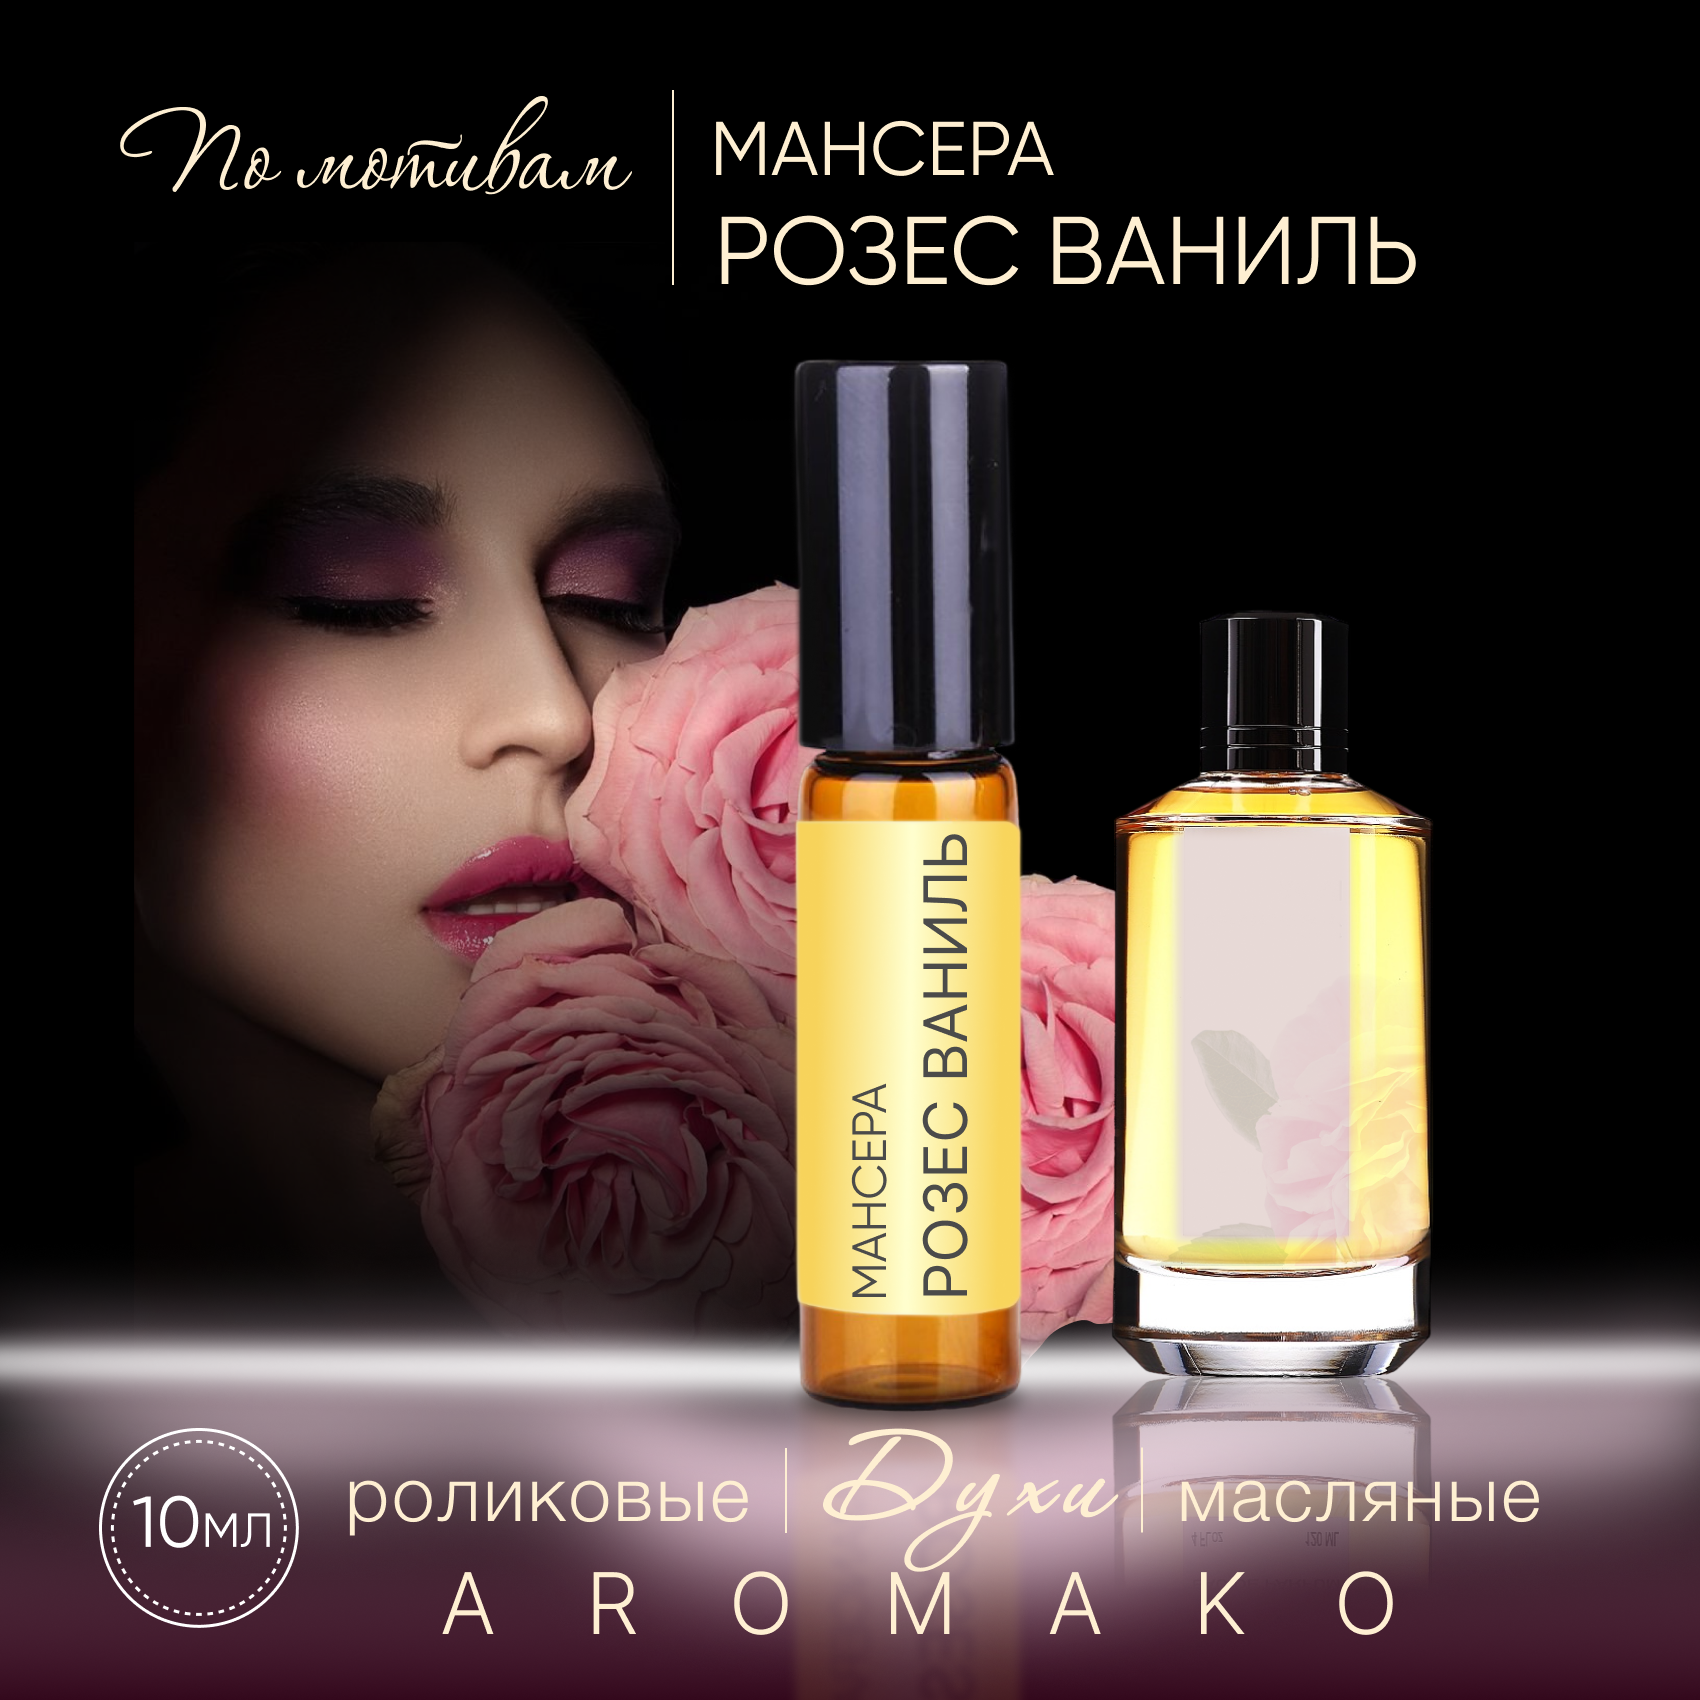 Духи масляные, парфюм - ролик по мотивам Mancera "Roses Vanille" 10 мл, AROMAKO